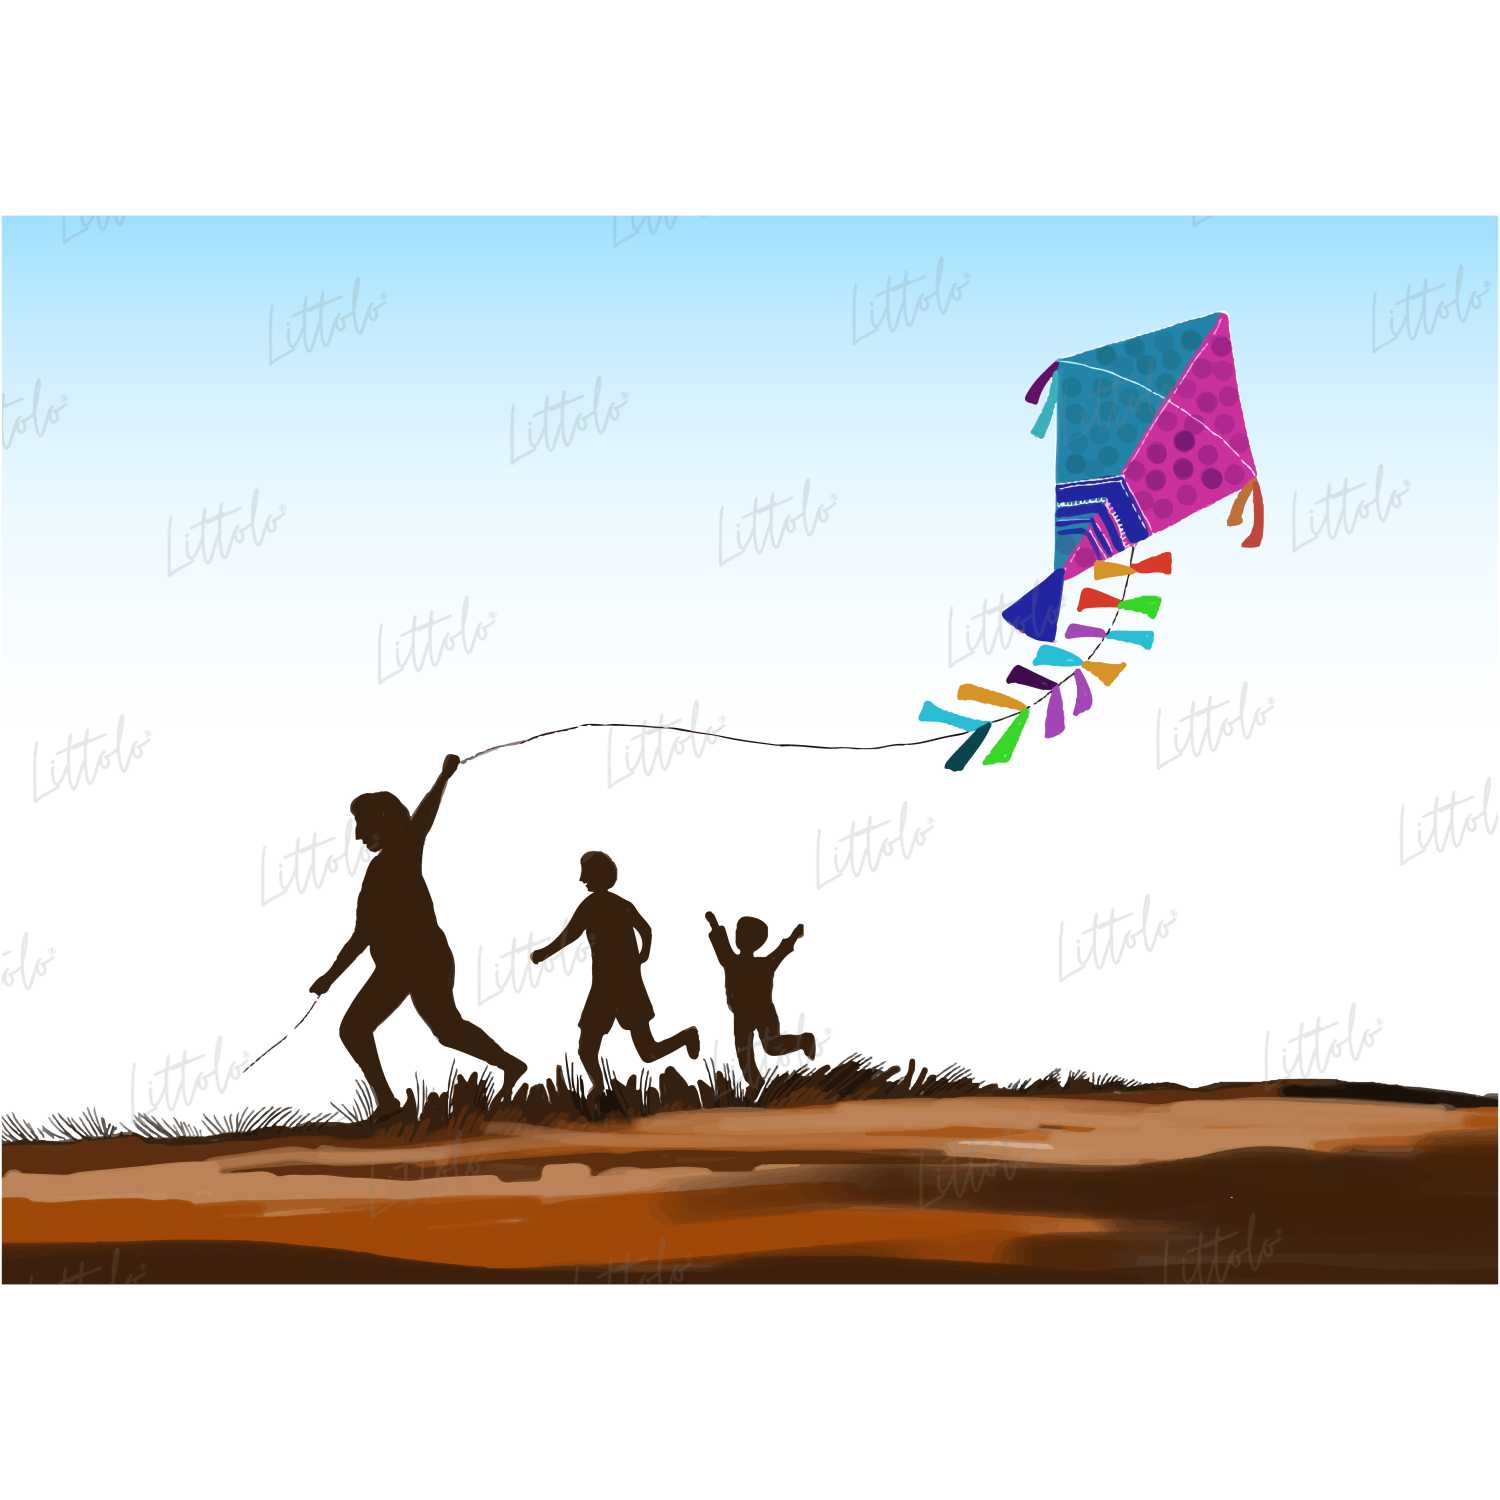 Free Shipping Plane kites flying toys for children kites string line flying  fighter kite flying toy power kite Child kite - AliExpress